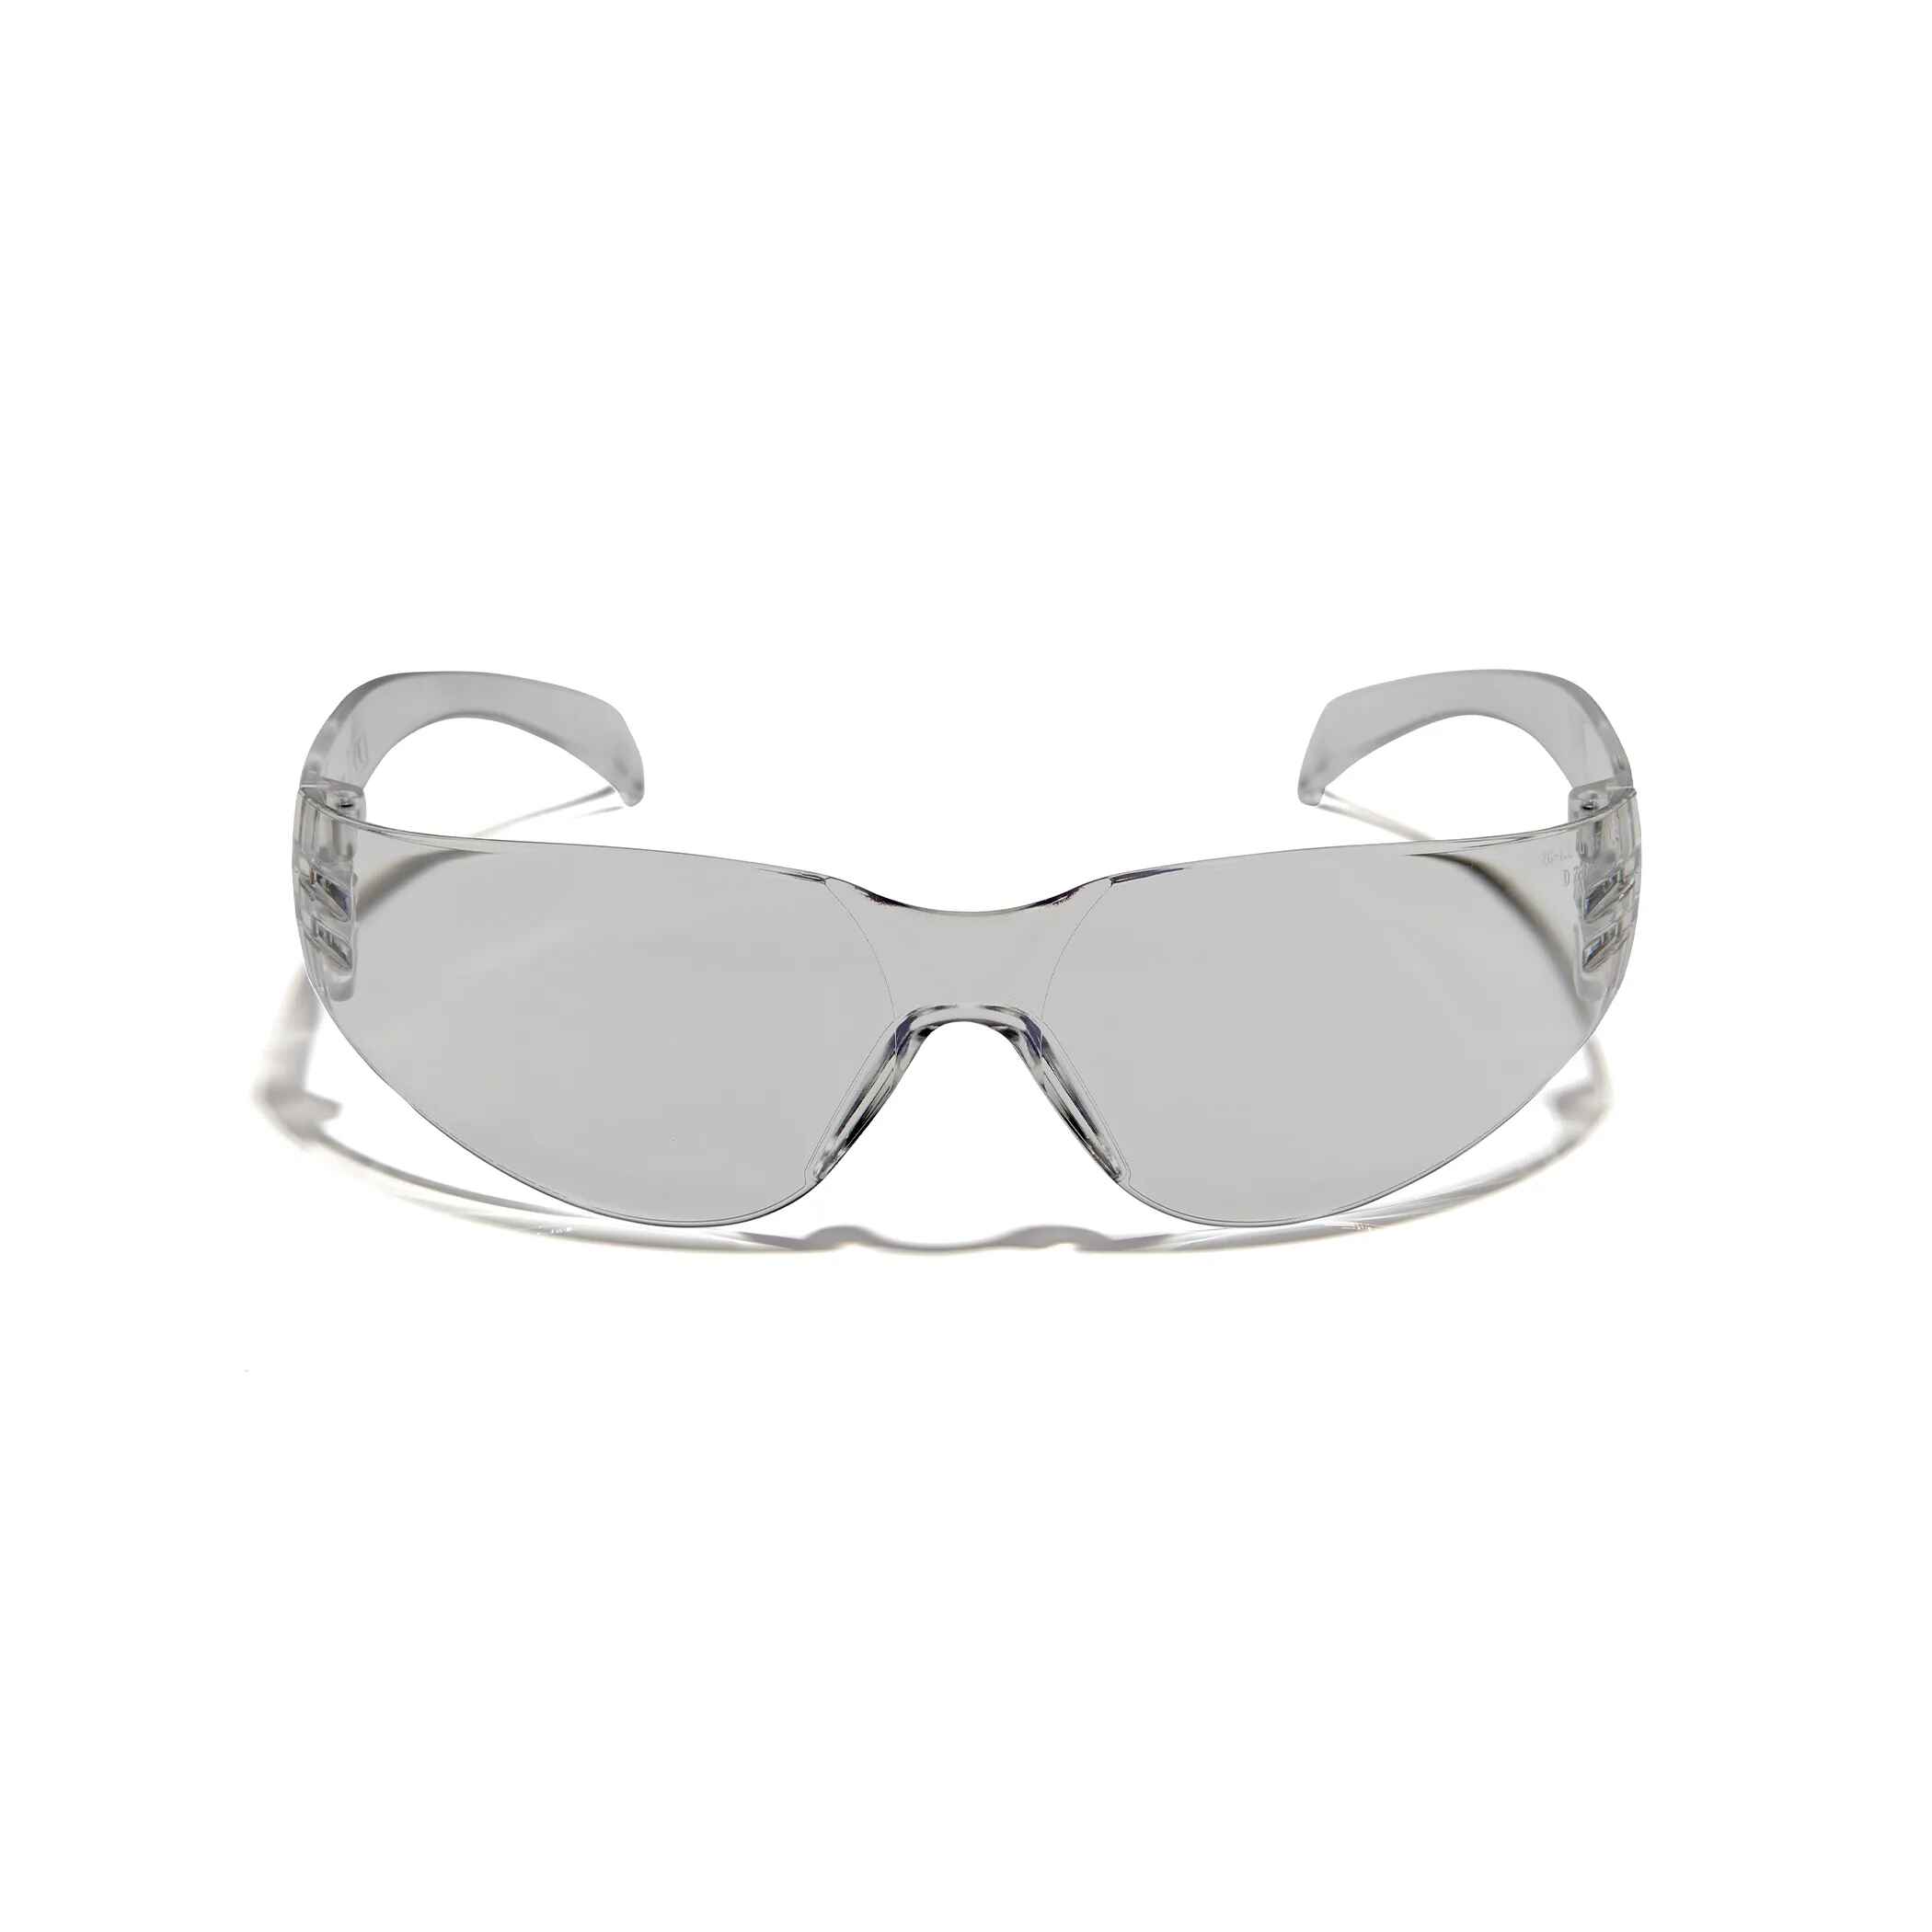 OPTIFENSE™ VS1 SMOKED Glasses, ANSI Z87+, 30pc per Box - Defender Safety